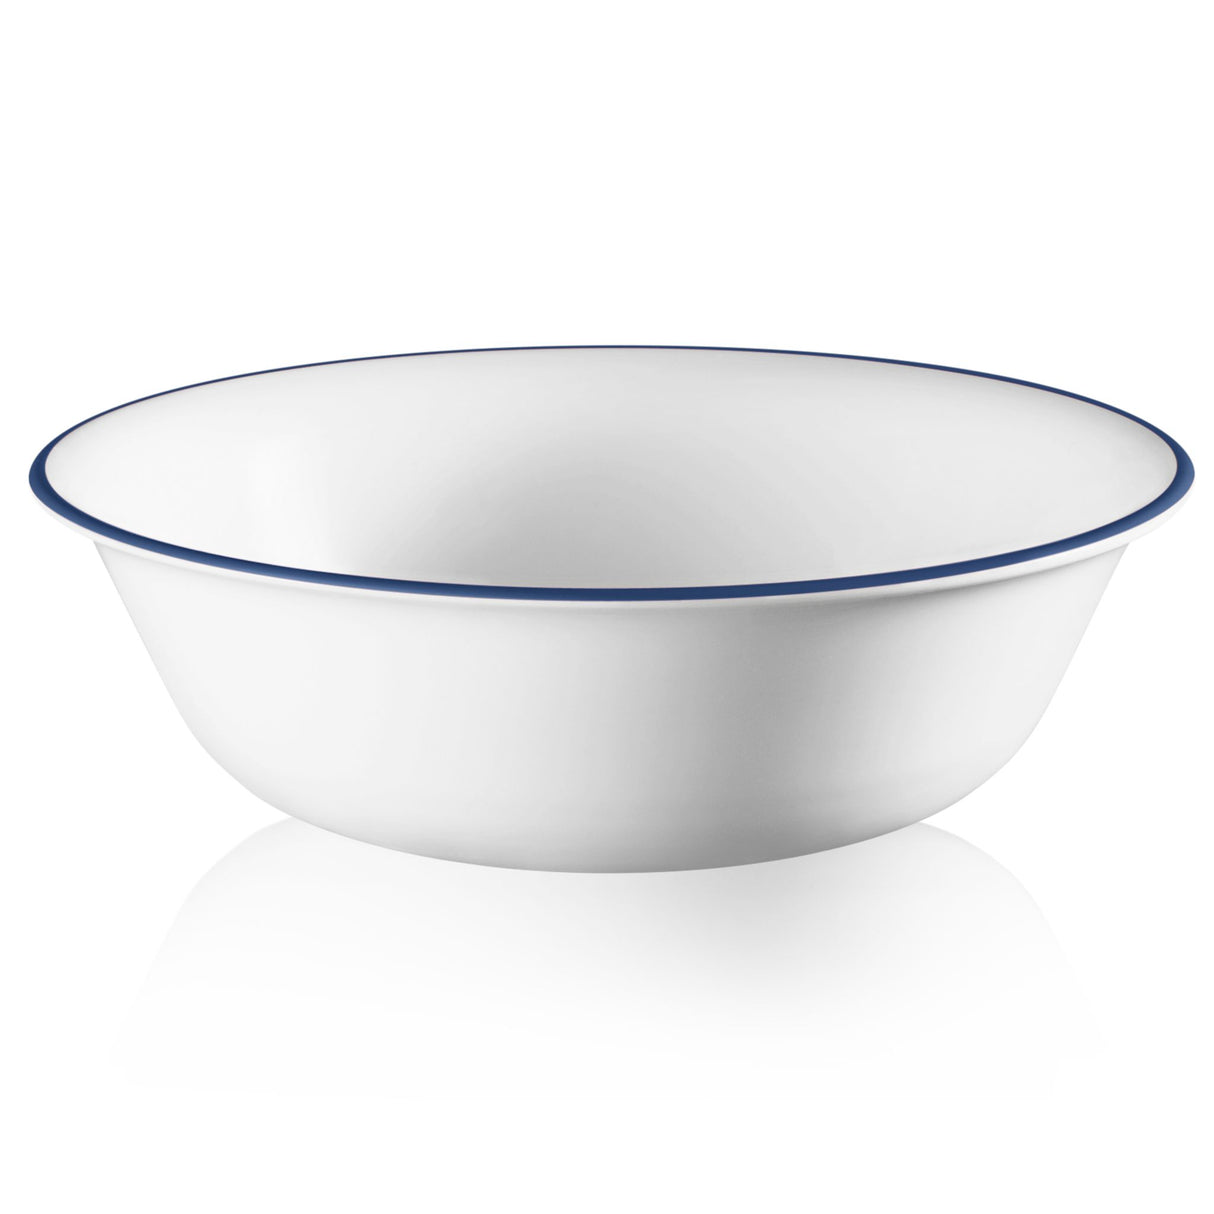  Artemis 18-ounce blue-rimmed cereal bowl